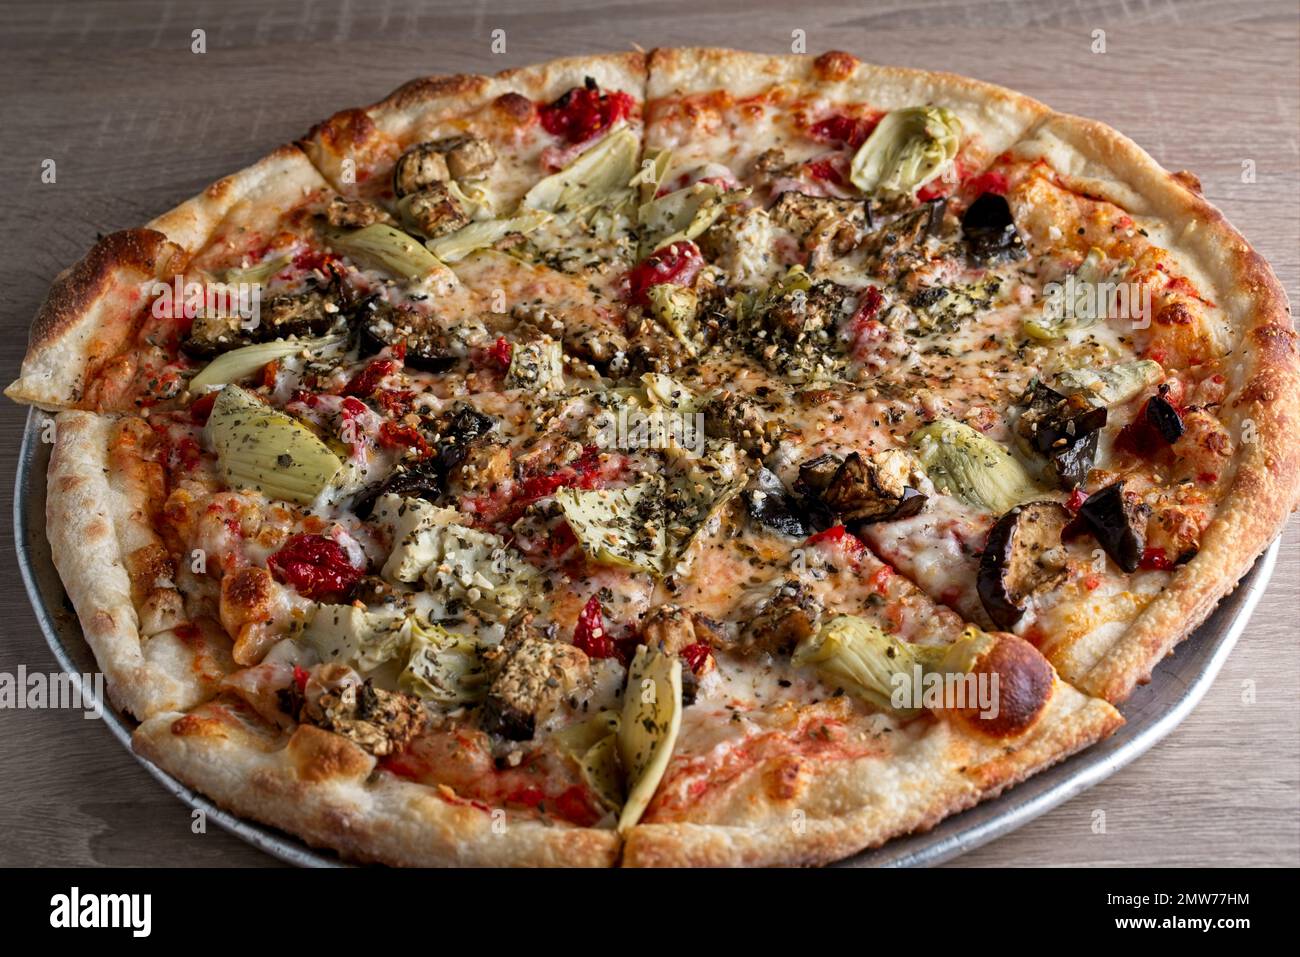 Gourmet pizza with artichoke, sun-dried tomato, eggplant, tomato sauce, on thin crust Stock Photo